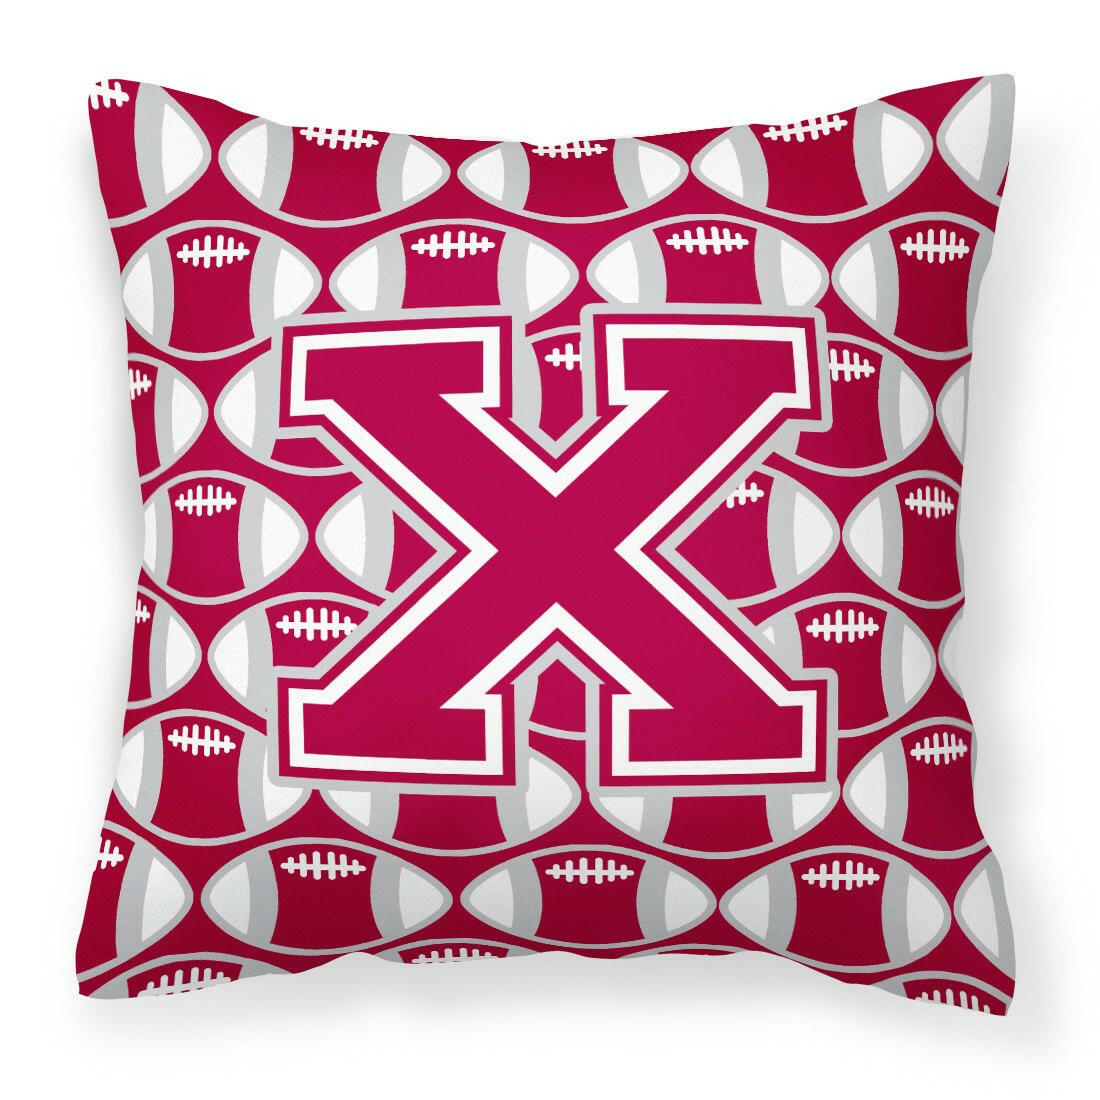 Letter X Football Crimson, grey and white Fabric Decorative Pillow CJ1065-XPW1414 by Caroline's Treasures